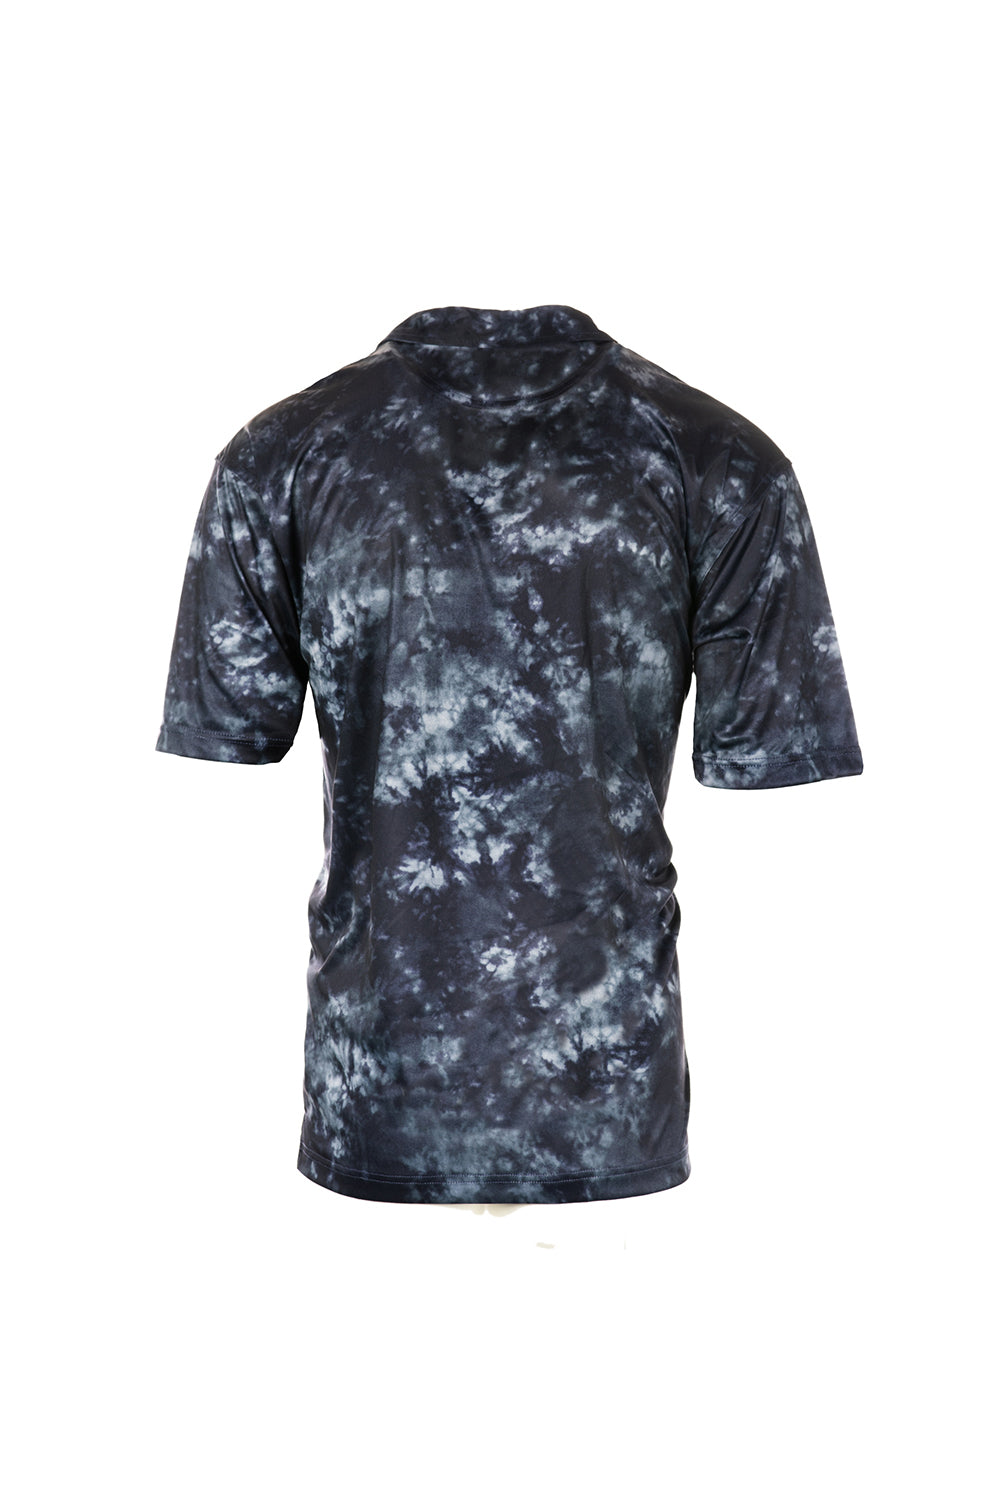 Burnside B0101 Mens Burn Moisture Wicking Short Sleeve Polo Shirt Navy Blue Tie Dye Flat Back